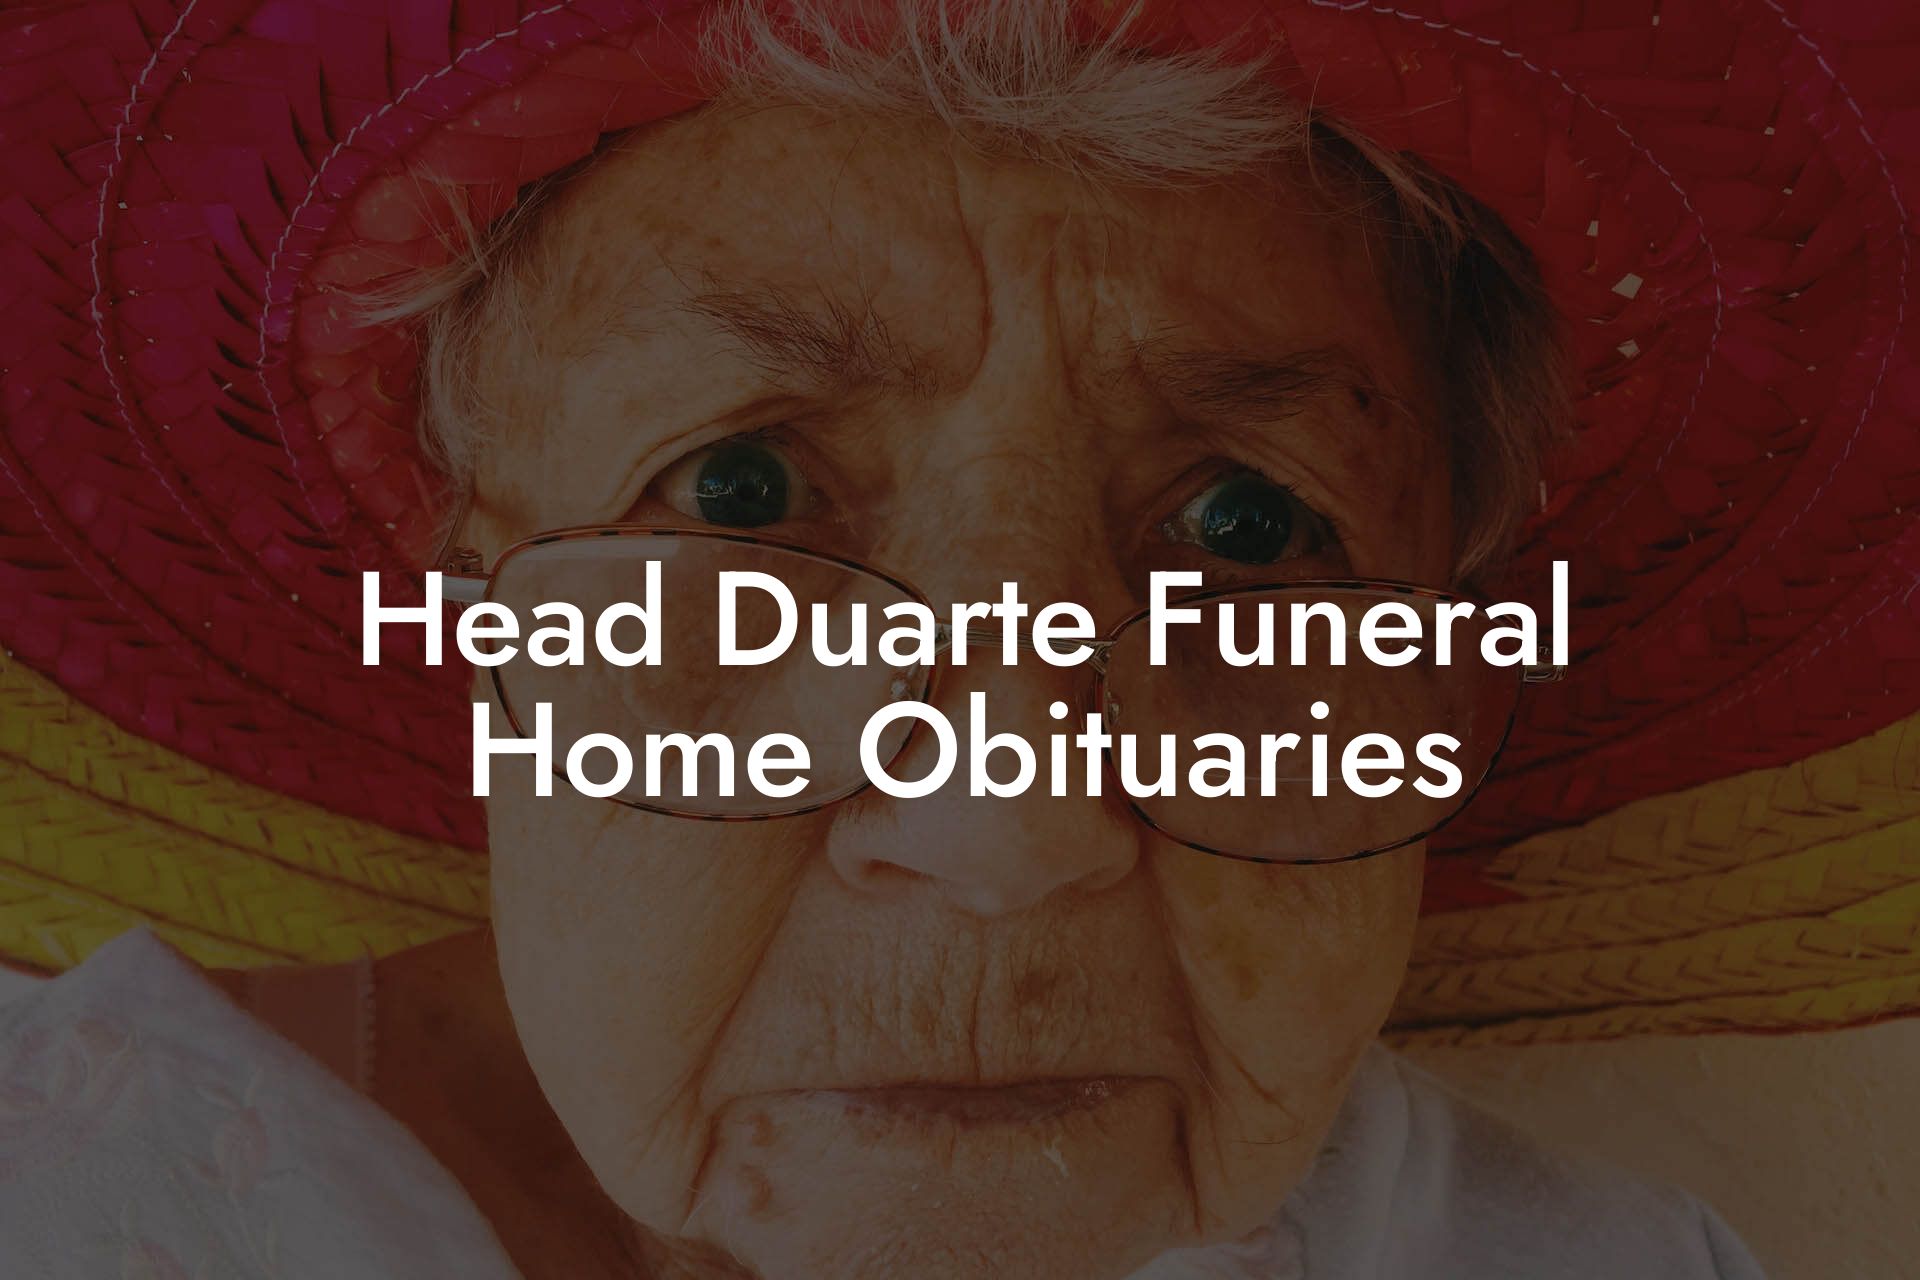 Head Duarte Funeral Home Obituaries